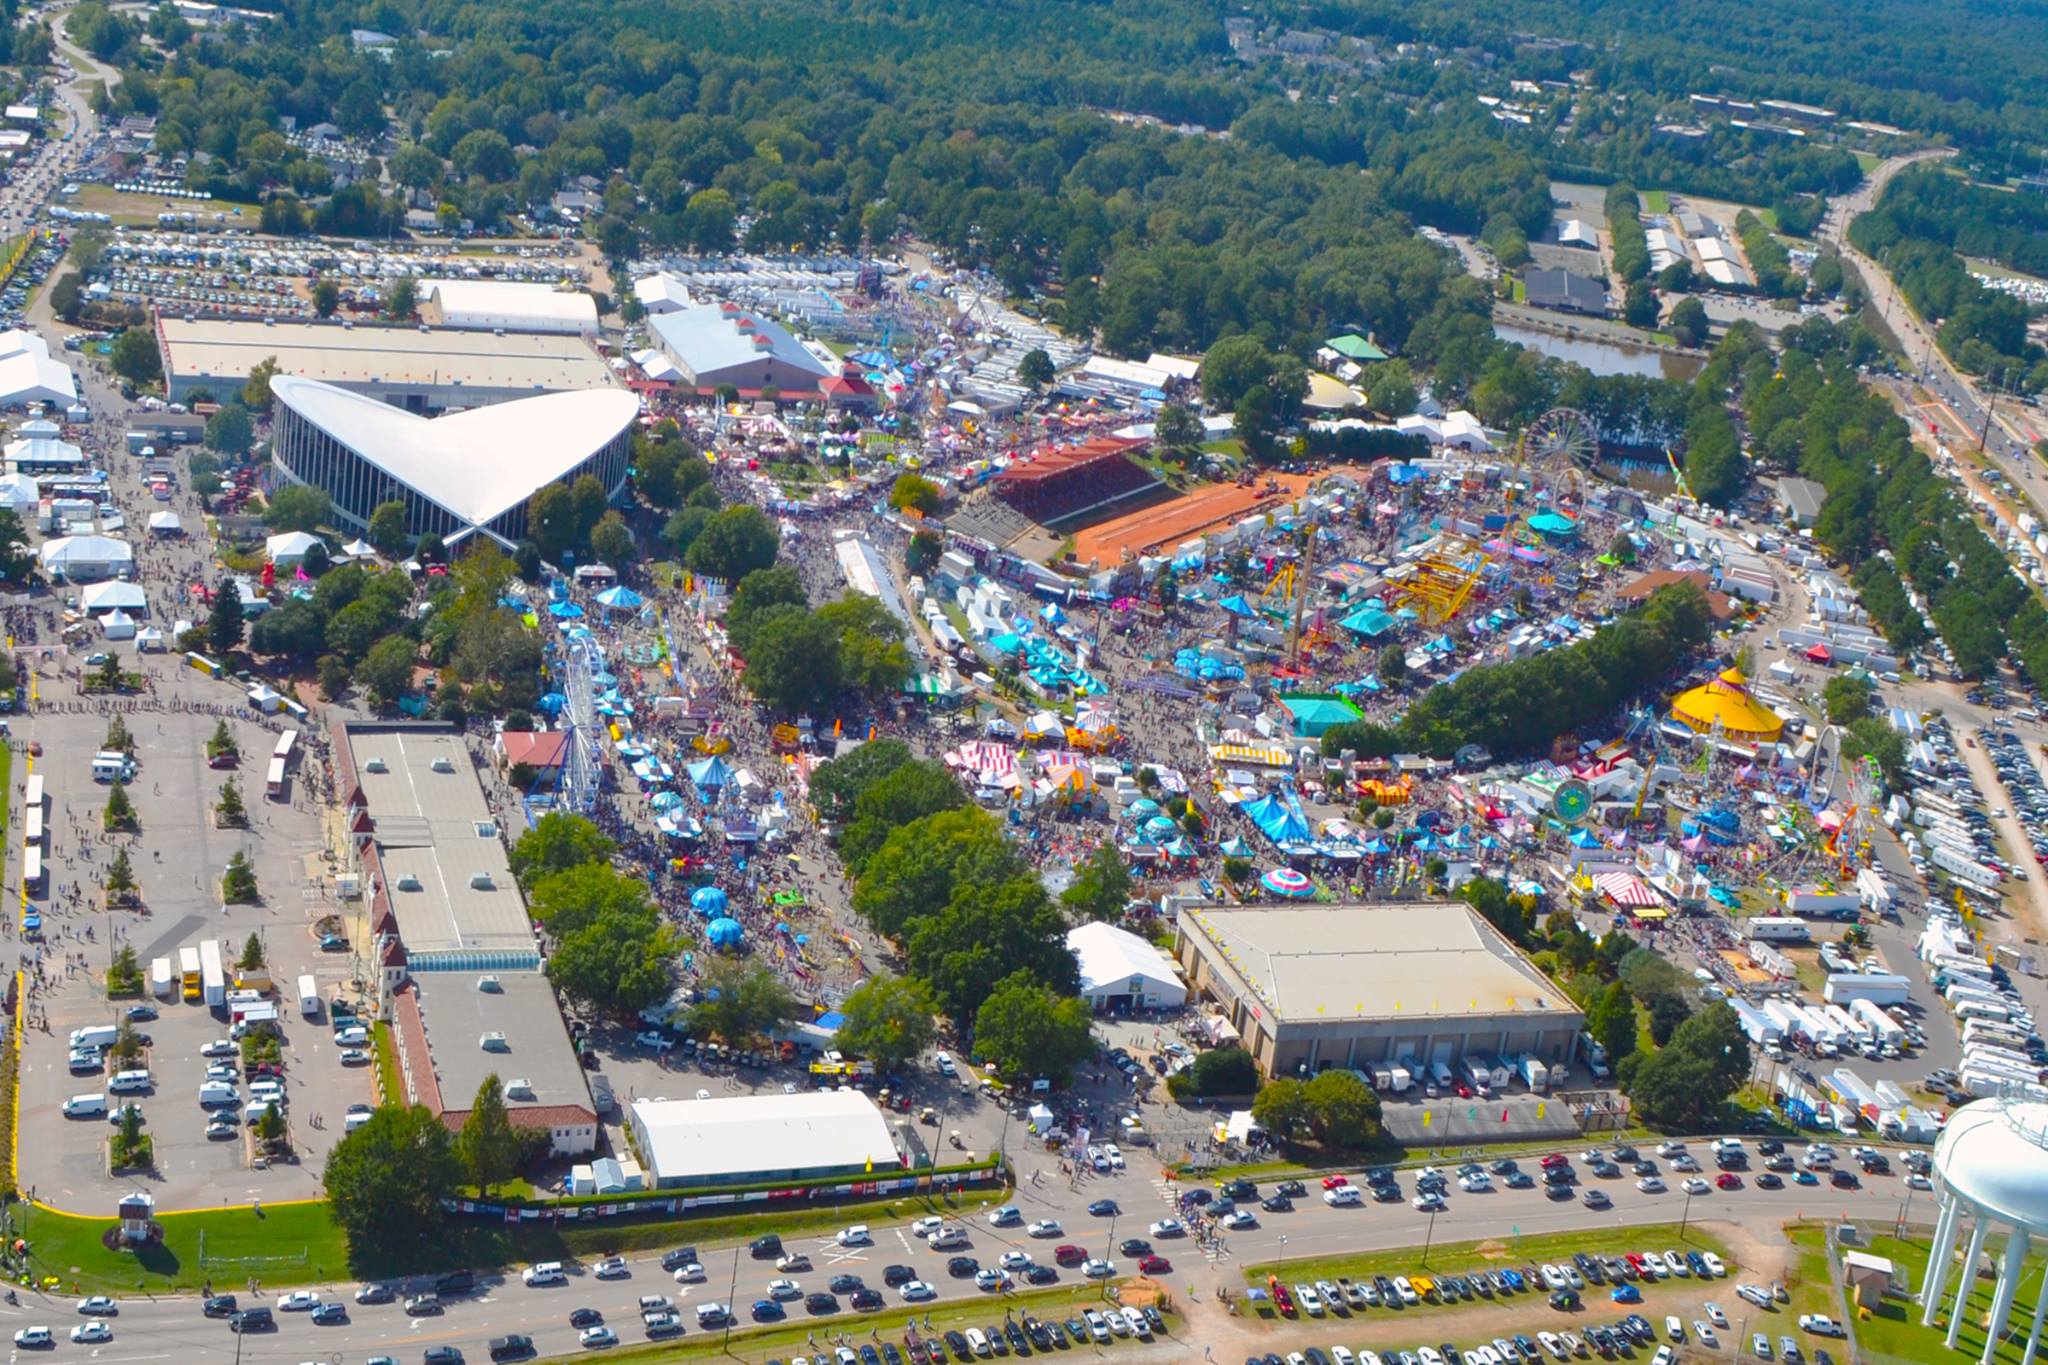 North Carolina State Fair